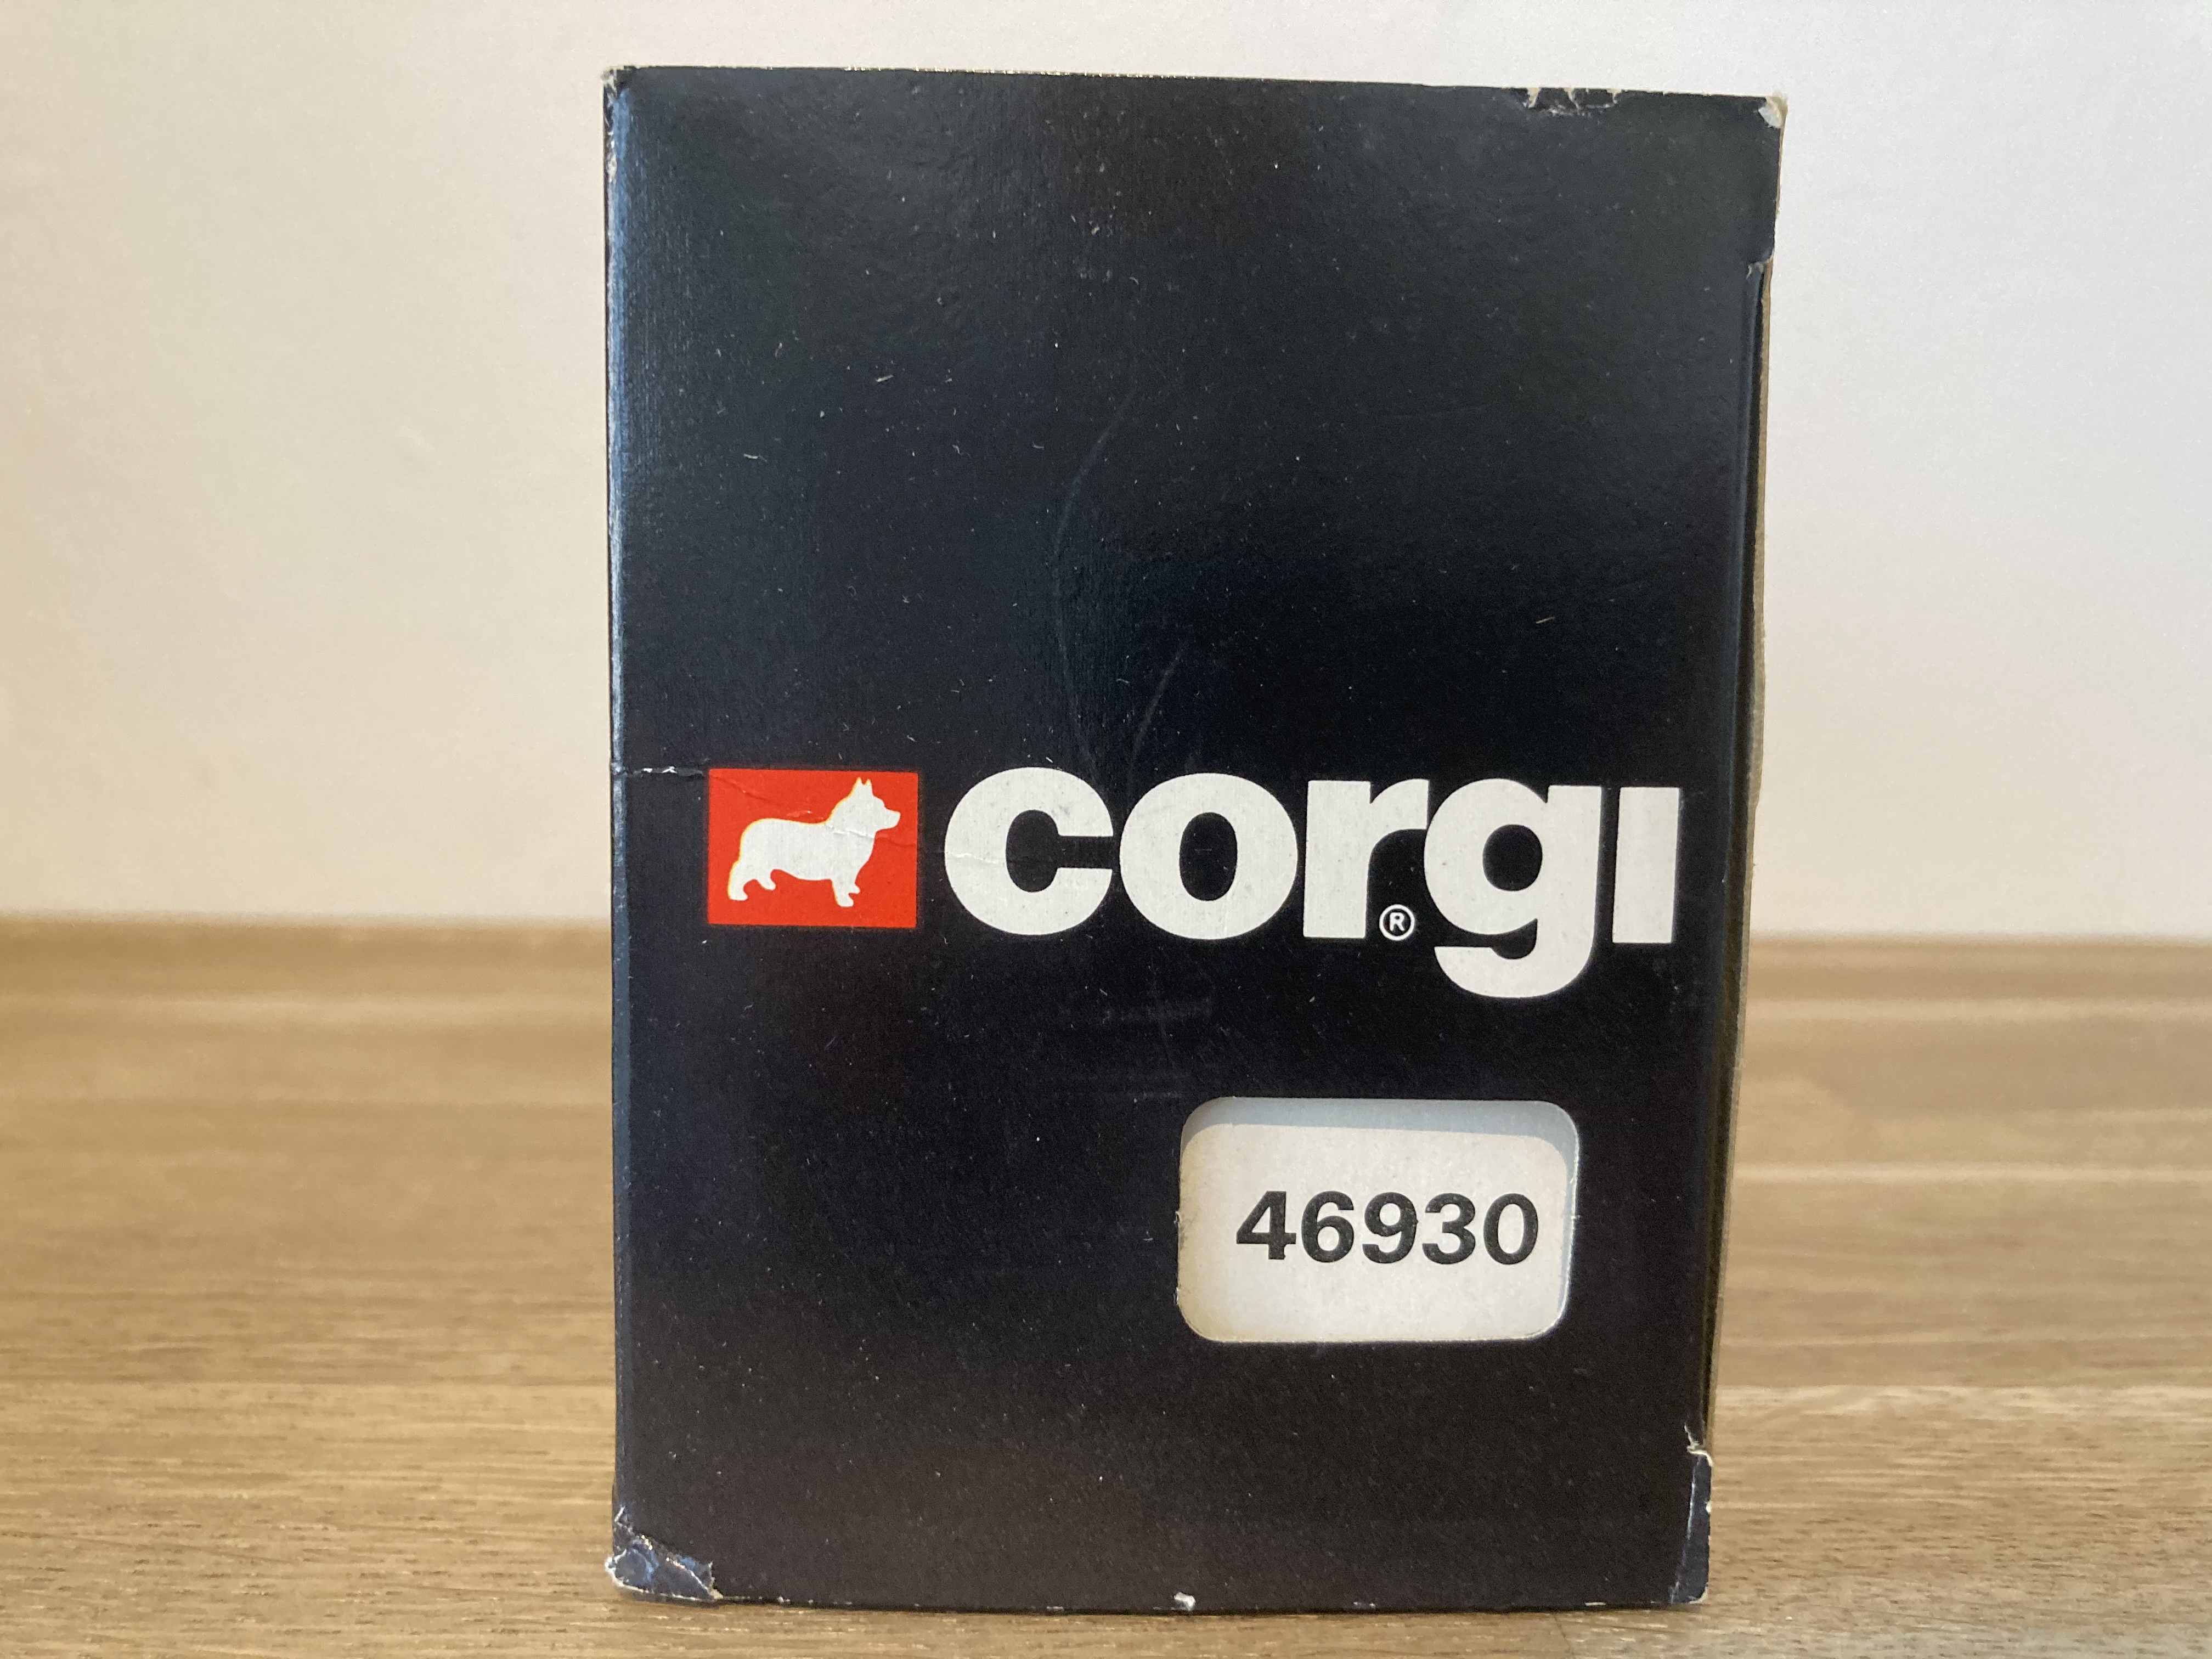 Corgi TDK Cassettess Routemaster - 469 - Image 3 of 3